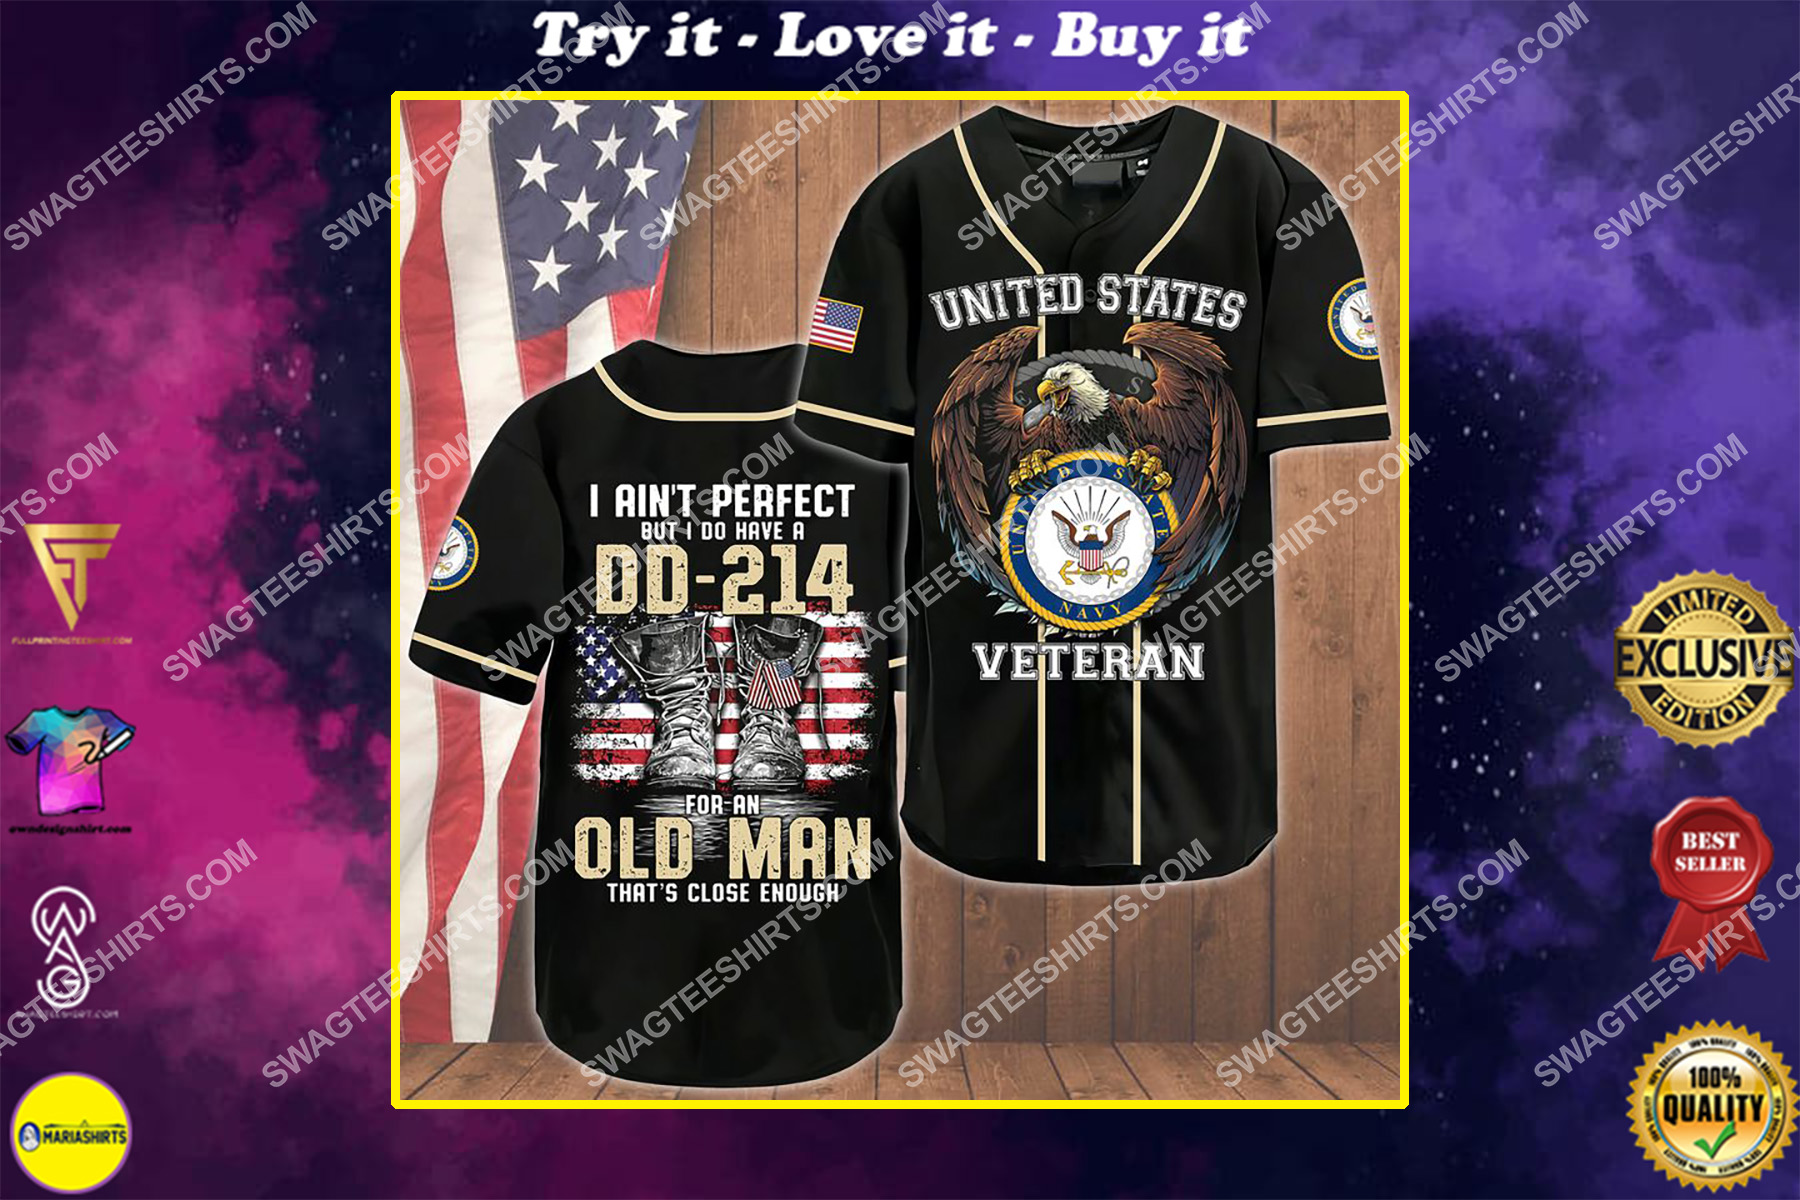 i ain't pperfect but i do have a dd-214 for an old man that's close enough navy veteran baseball shirt